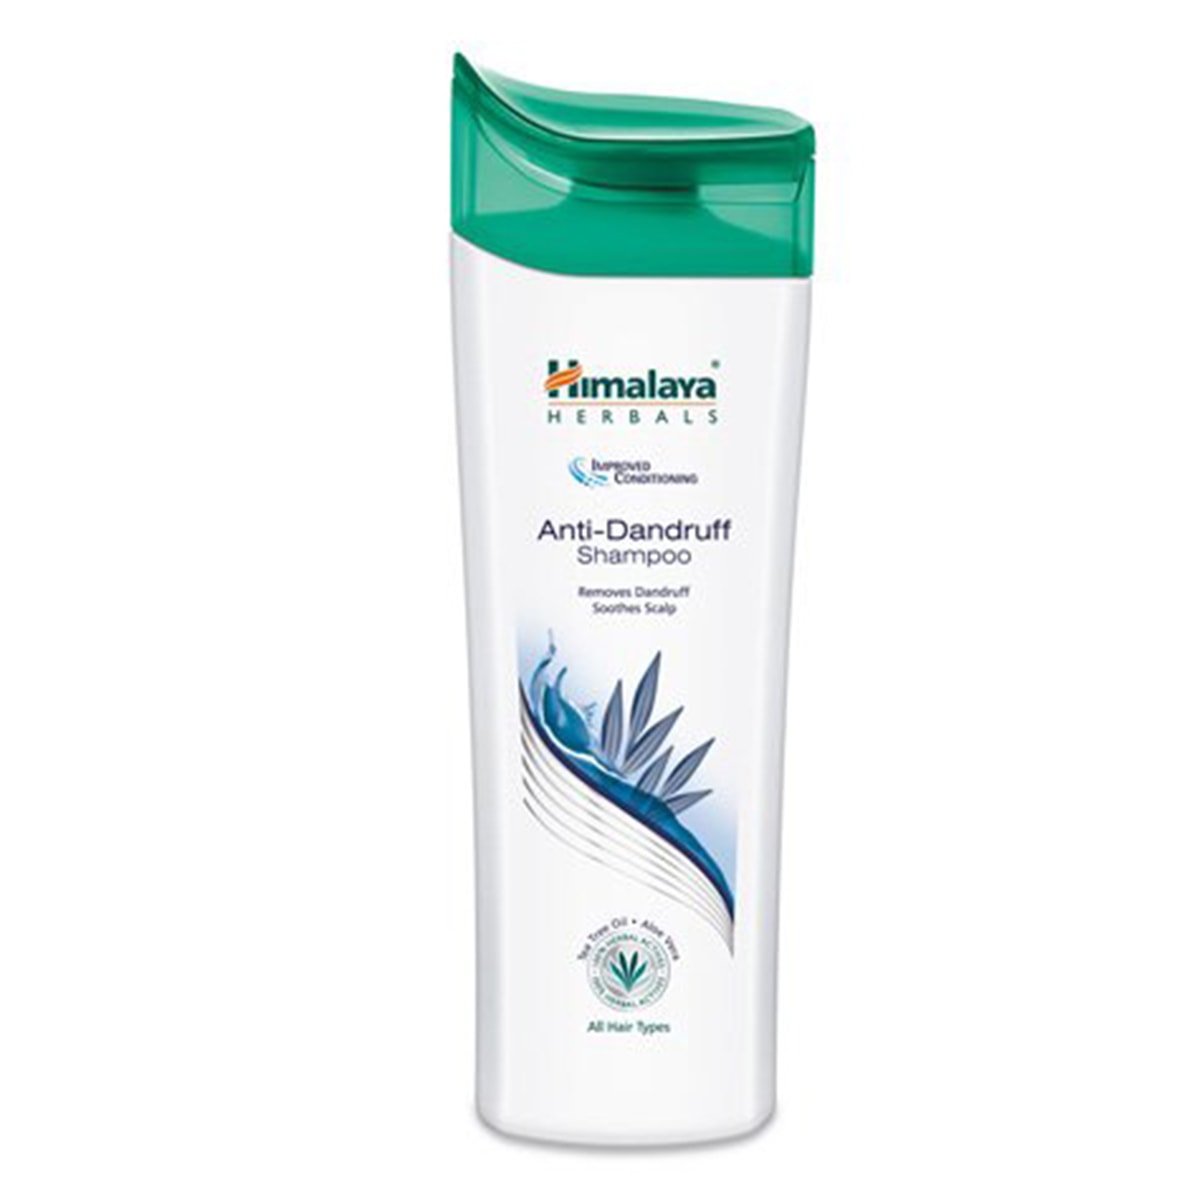 Buy Himalaya Herbals Anti Dandruff Hair Shampoo - 100 ml